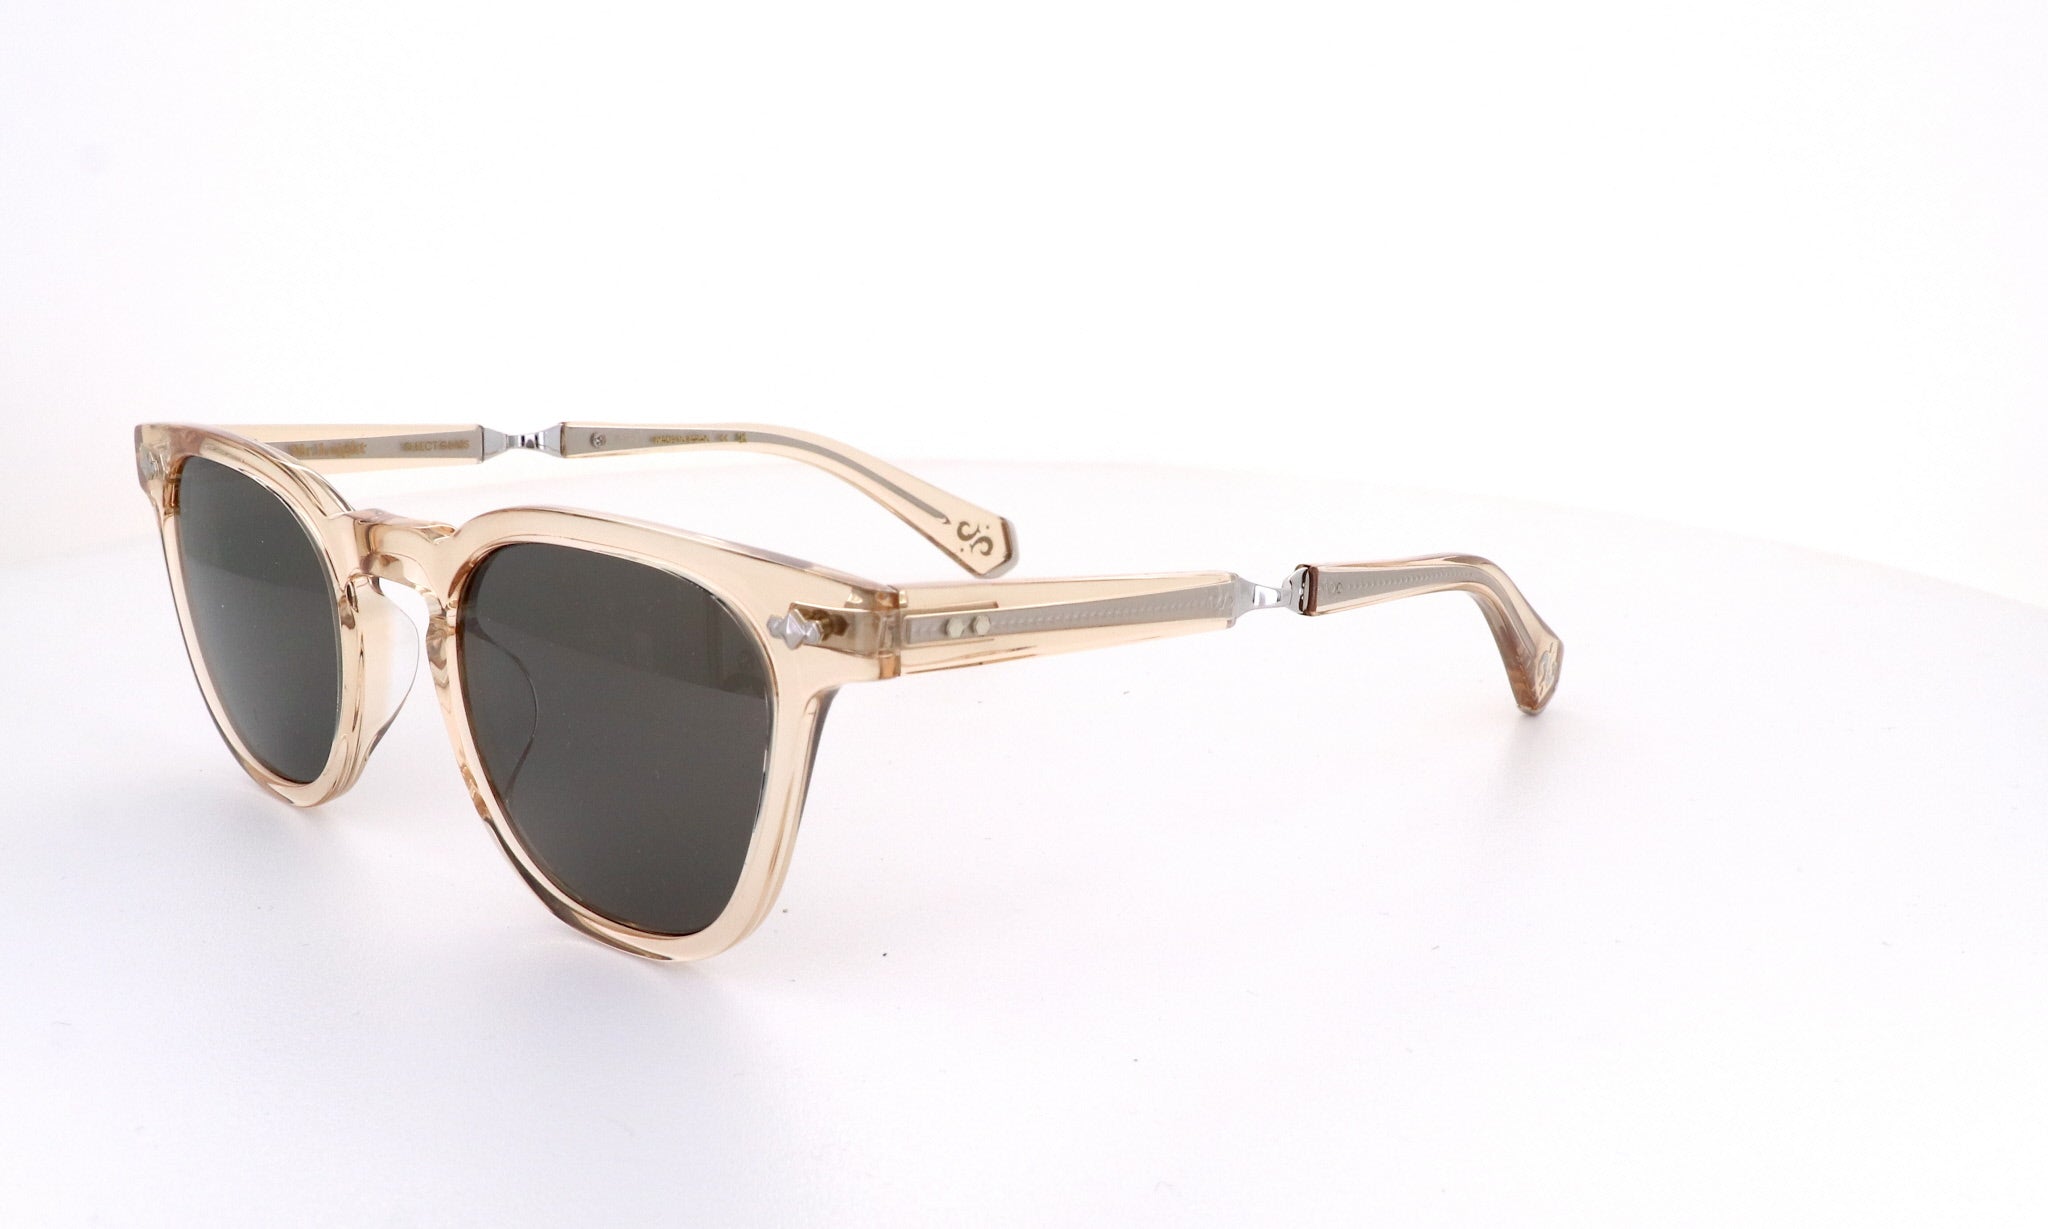 Sunglasses Leight Dean Mr. 2033 S ML